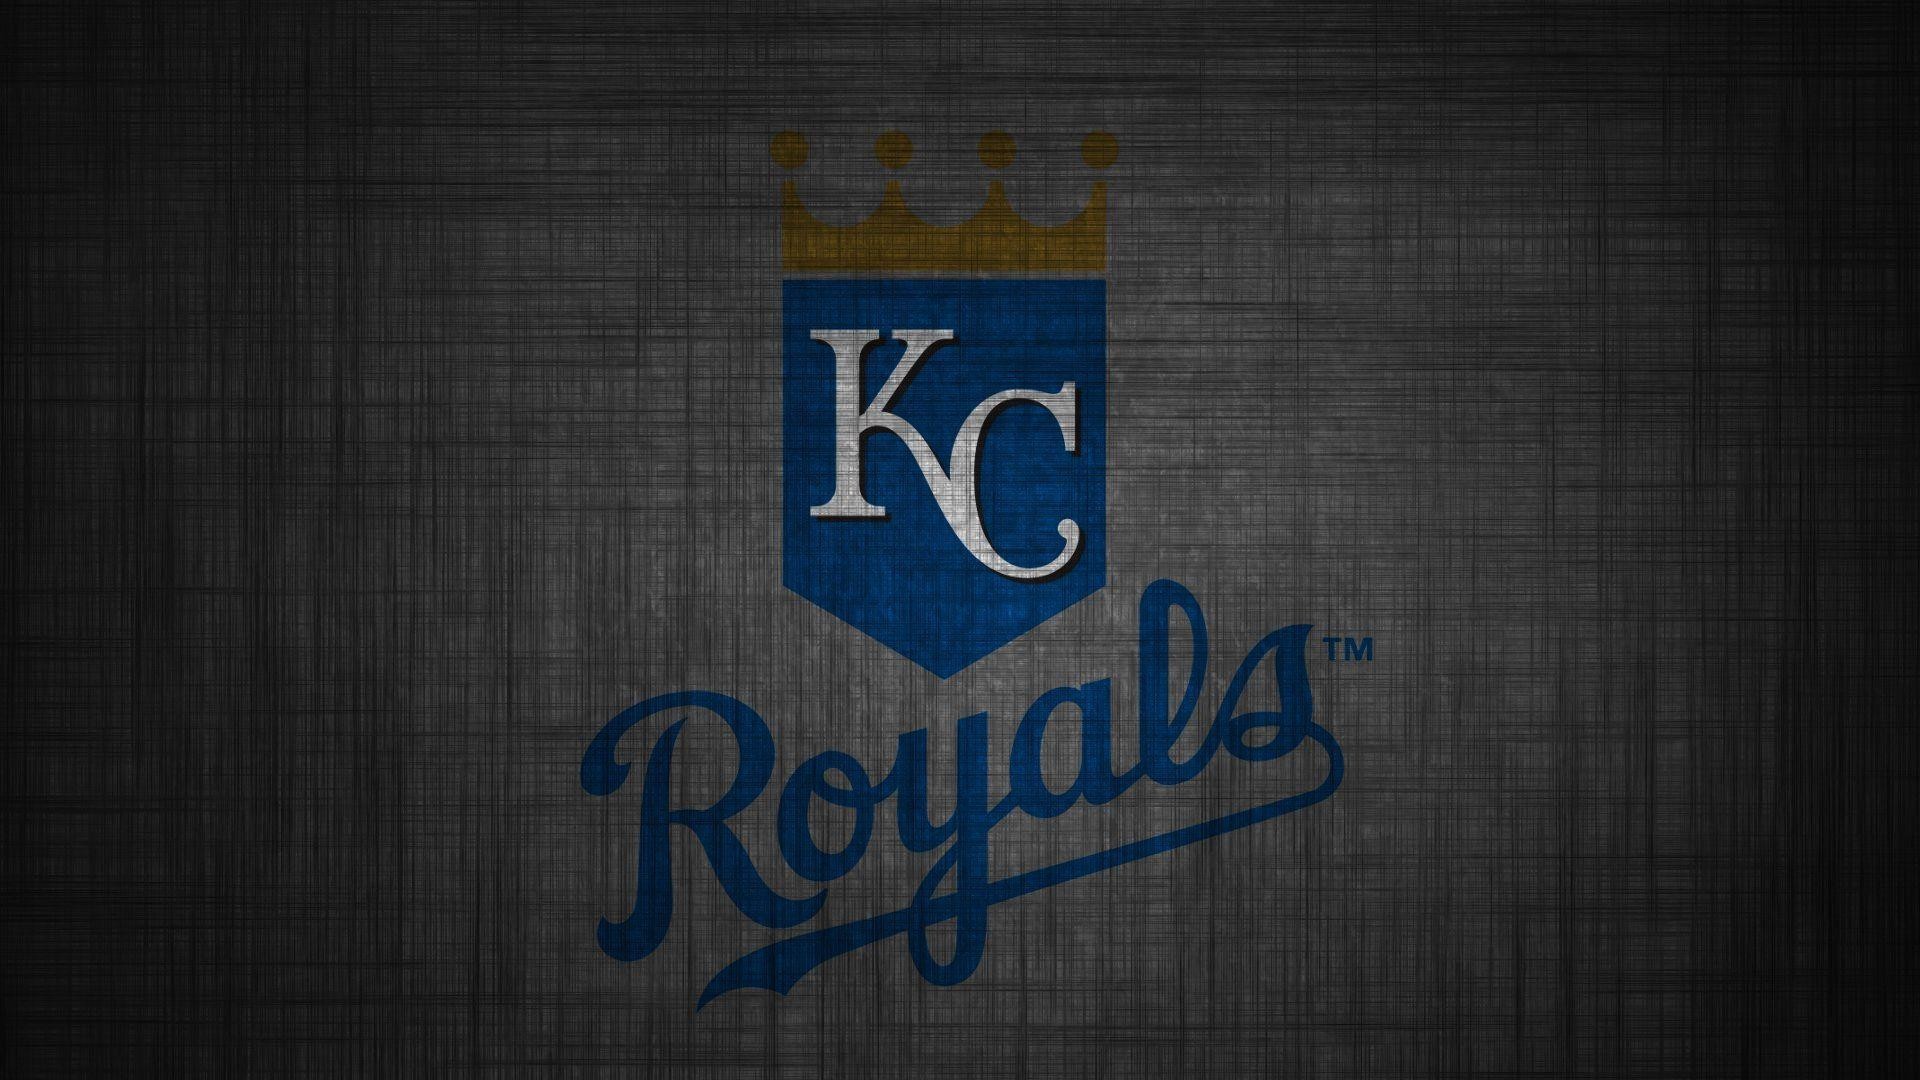 Kc Royals World Series Wallpaper 76 images